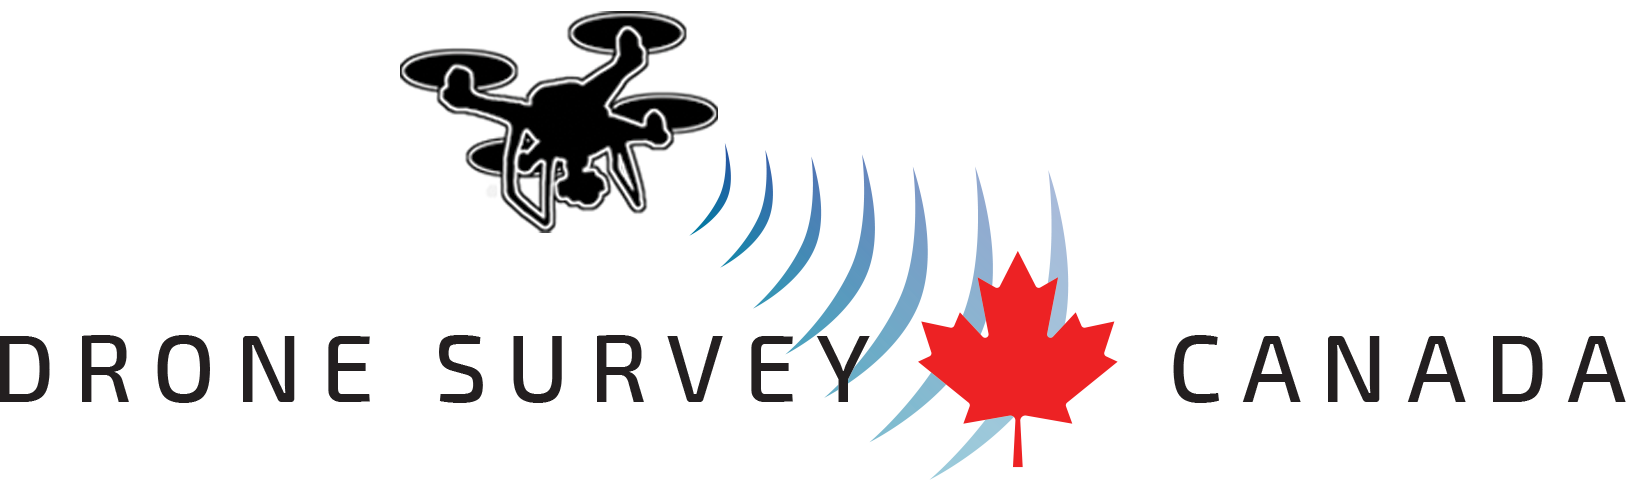 Drone Survey Canada long logo transparent